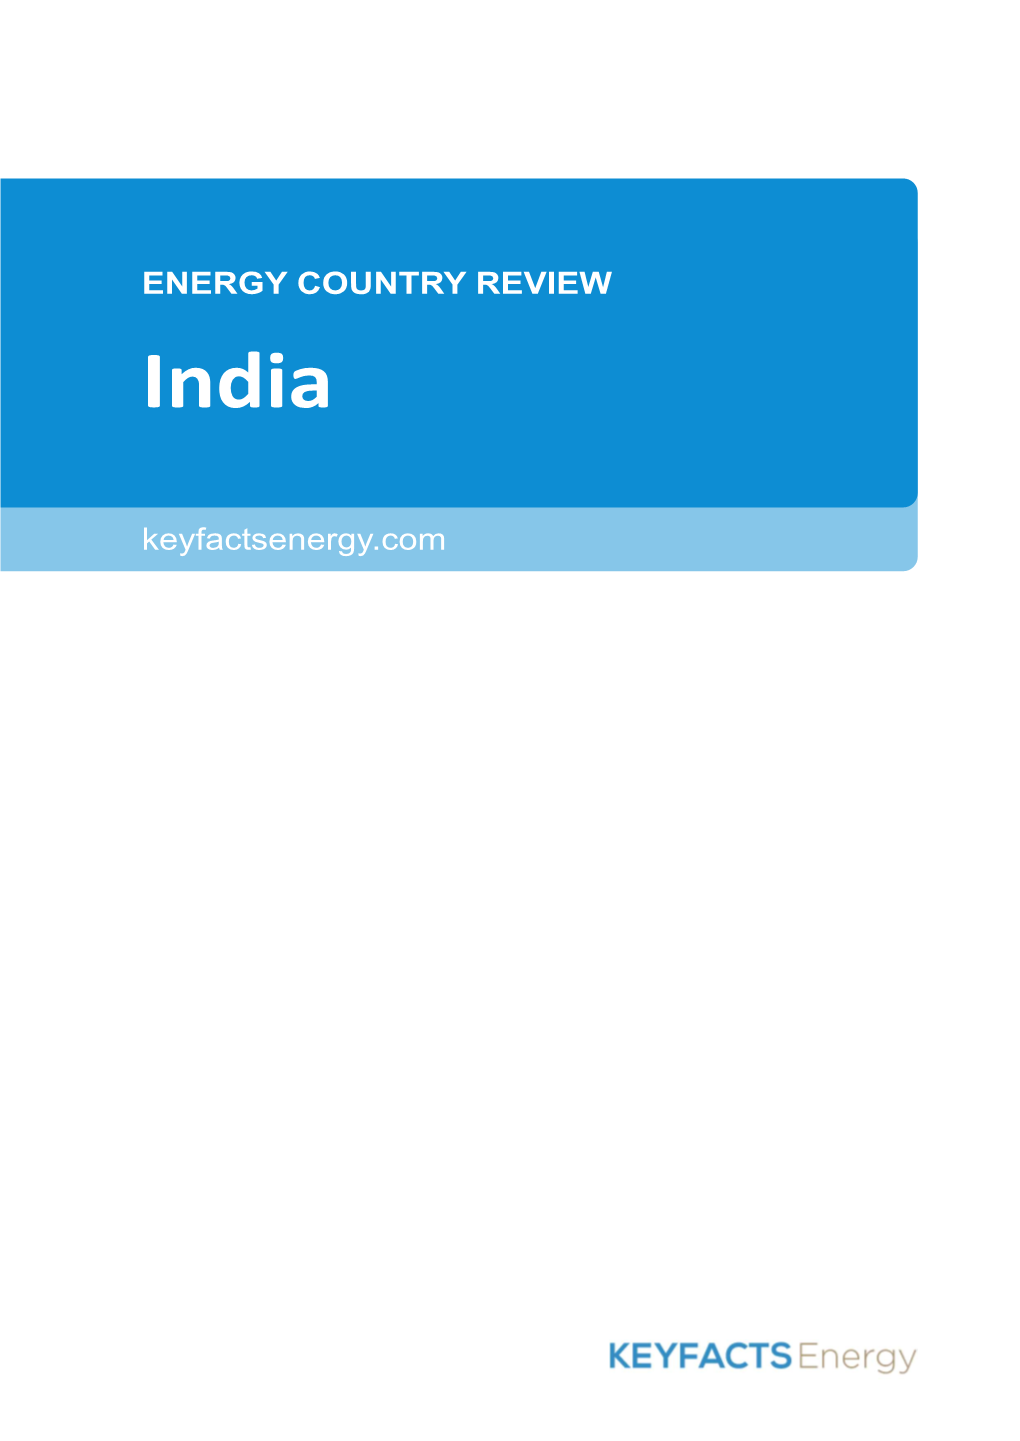 ENERGY COUNTRY REVIEW Keyfactsenergy.Com